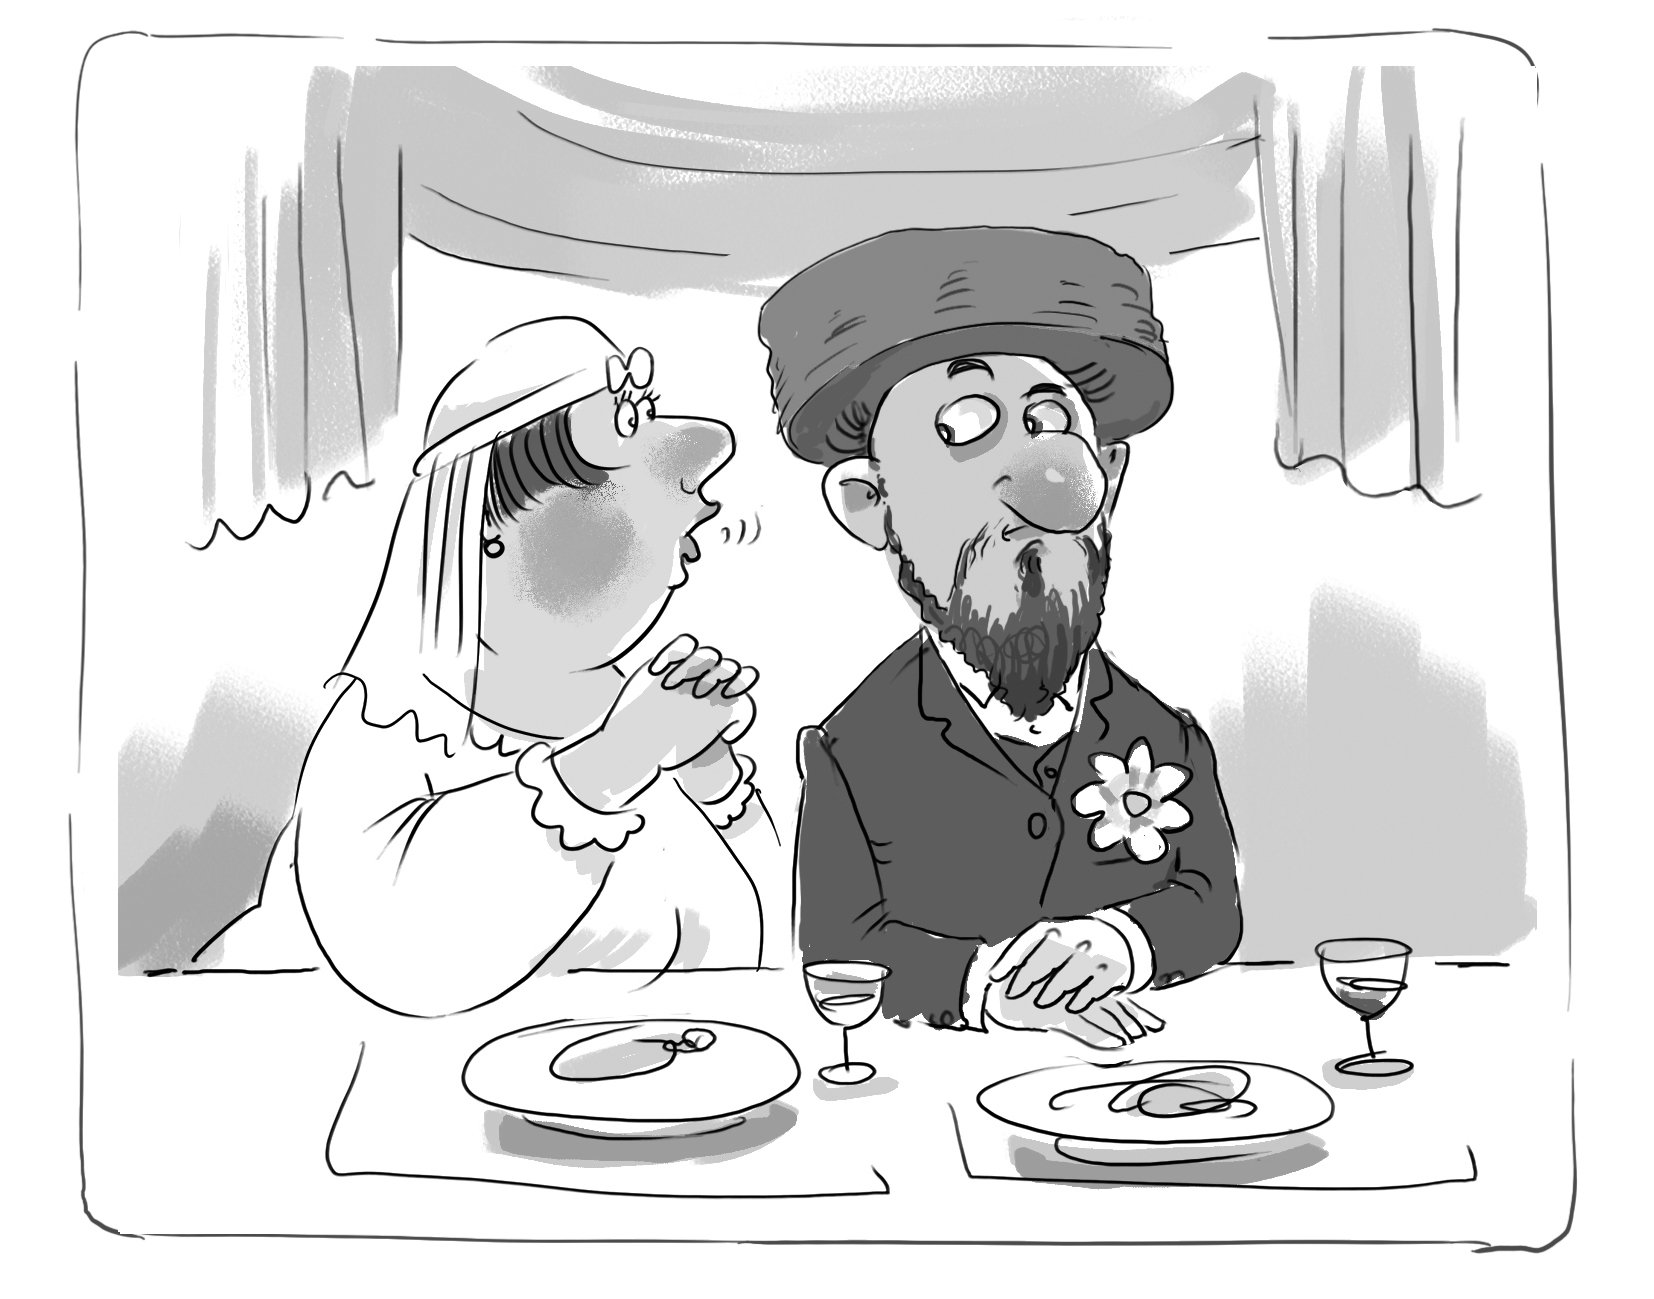 Еврейские кучки 2024 когда. Еврейские карикатуры. Еврей карикатура. Смешные еврейские карикатуры. Смешные карикатуры на евреев.